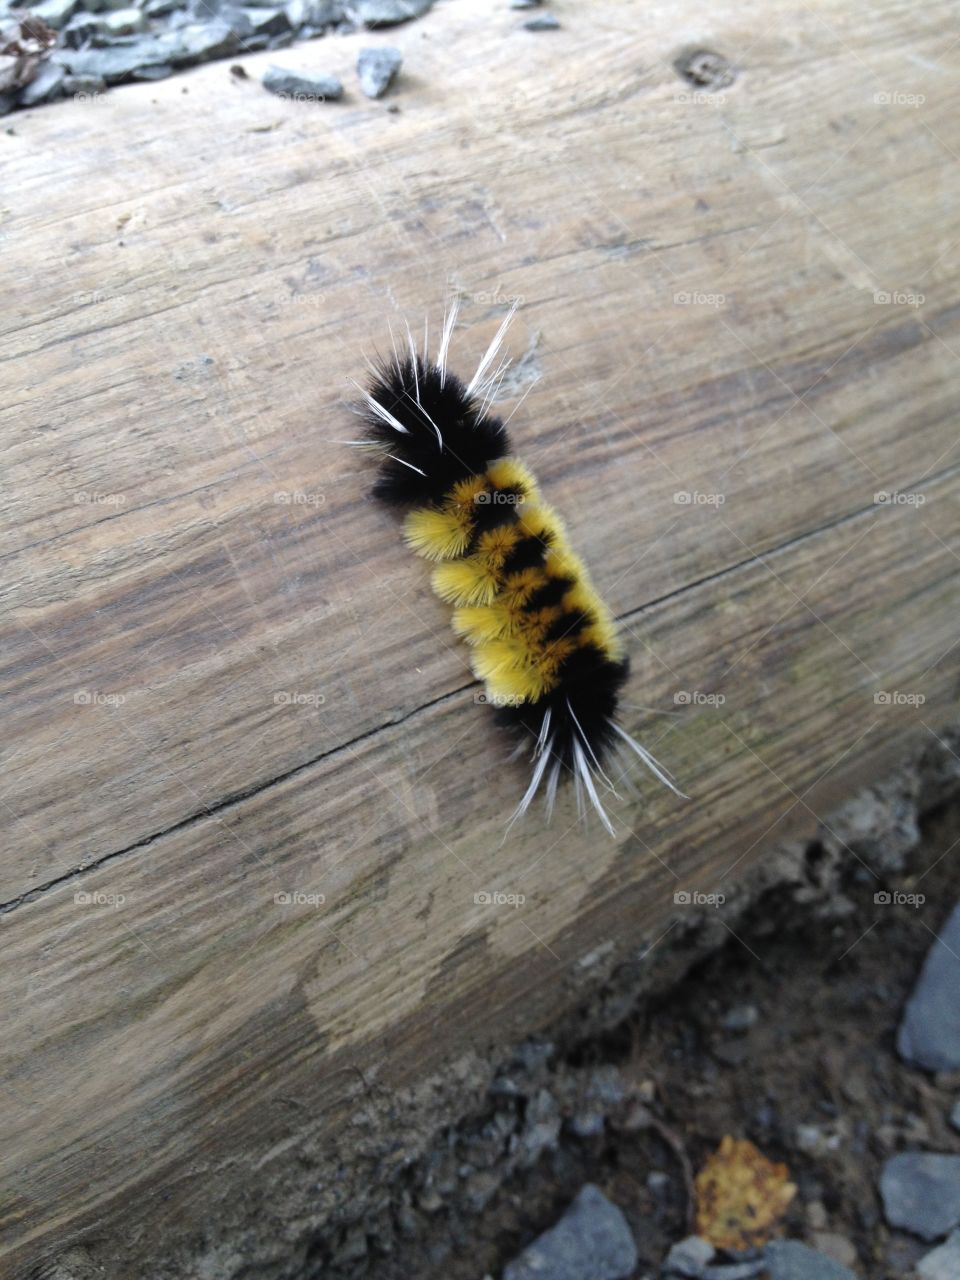 Yellow and Black caterpillar